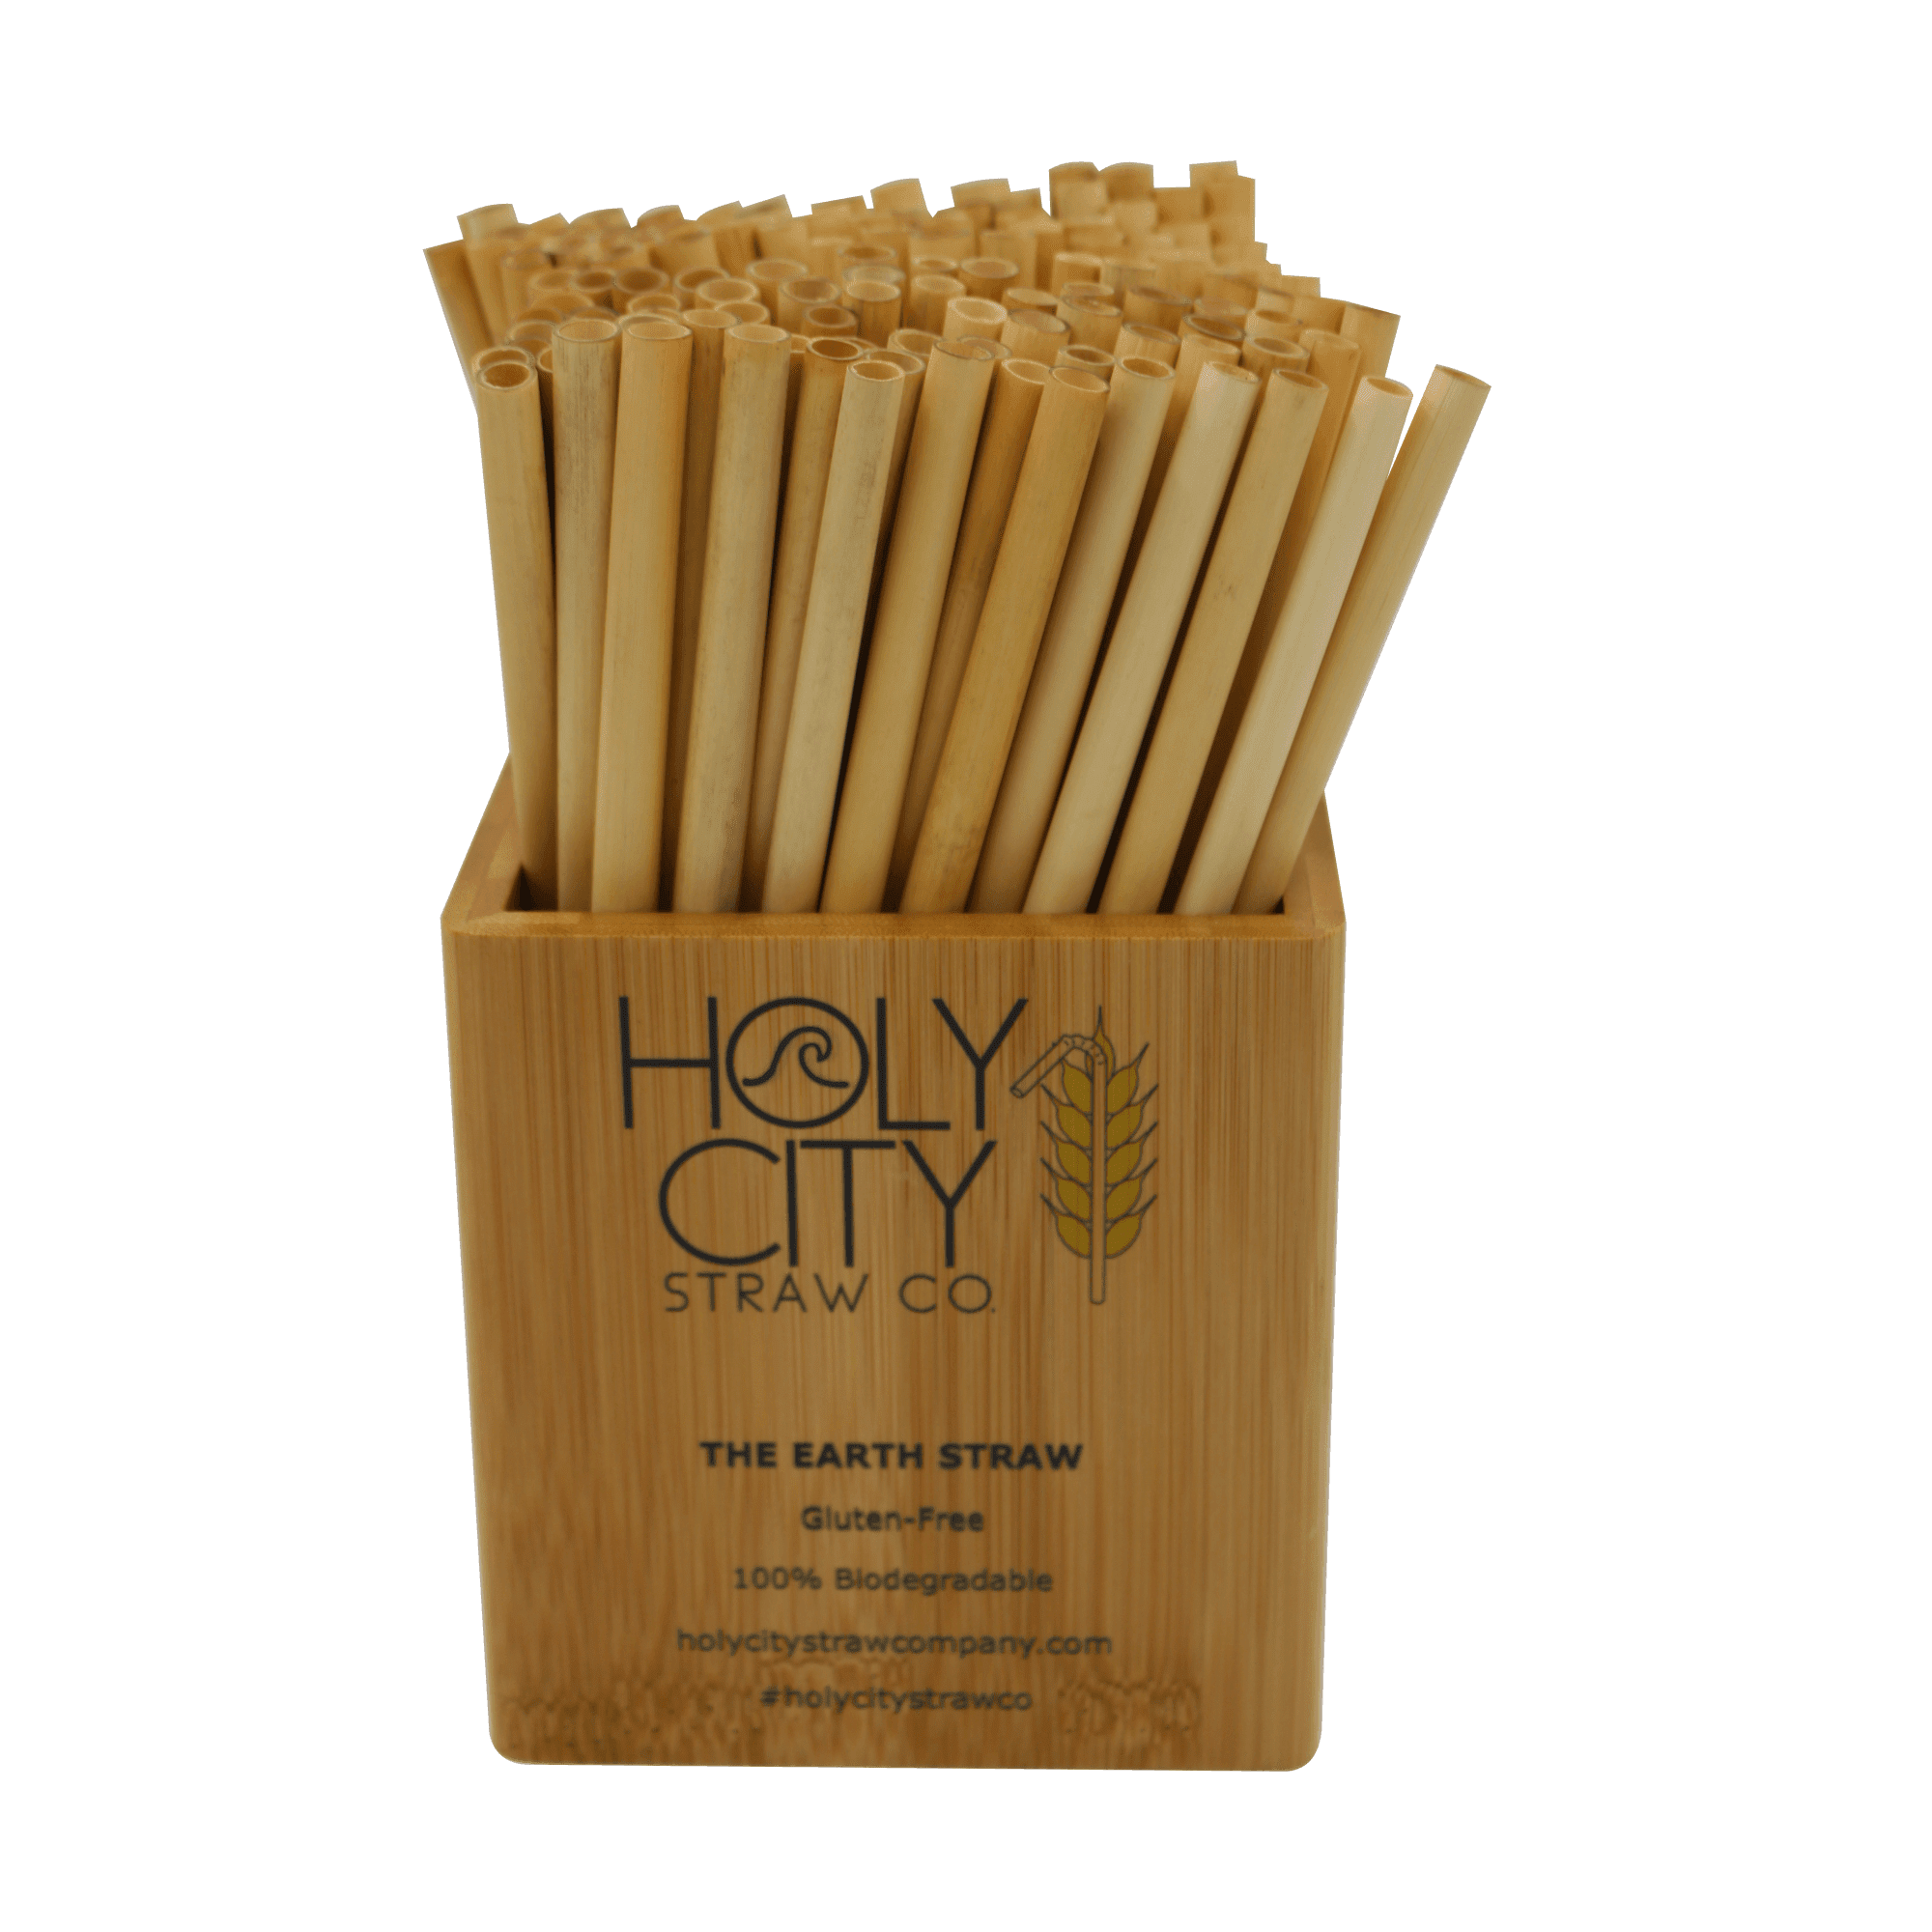 Holy City Straw Company Bamboo Holder full of reusable reed straws.